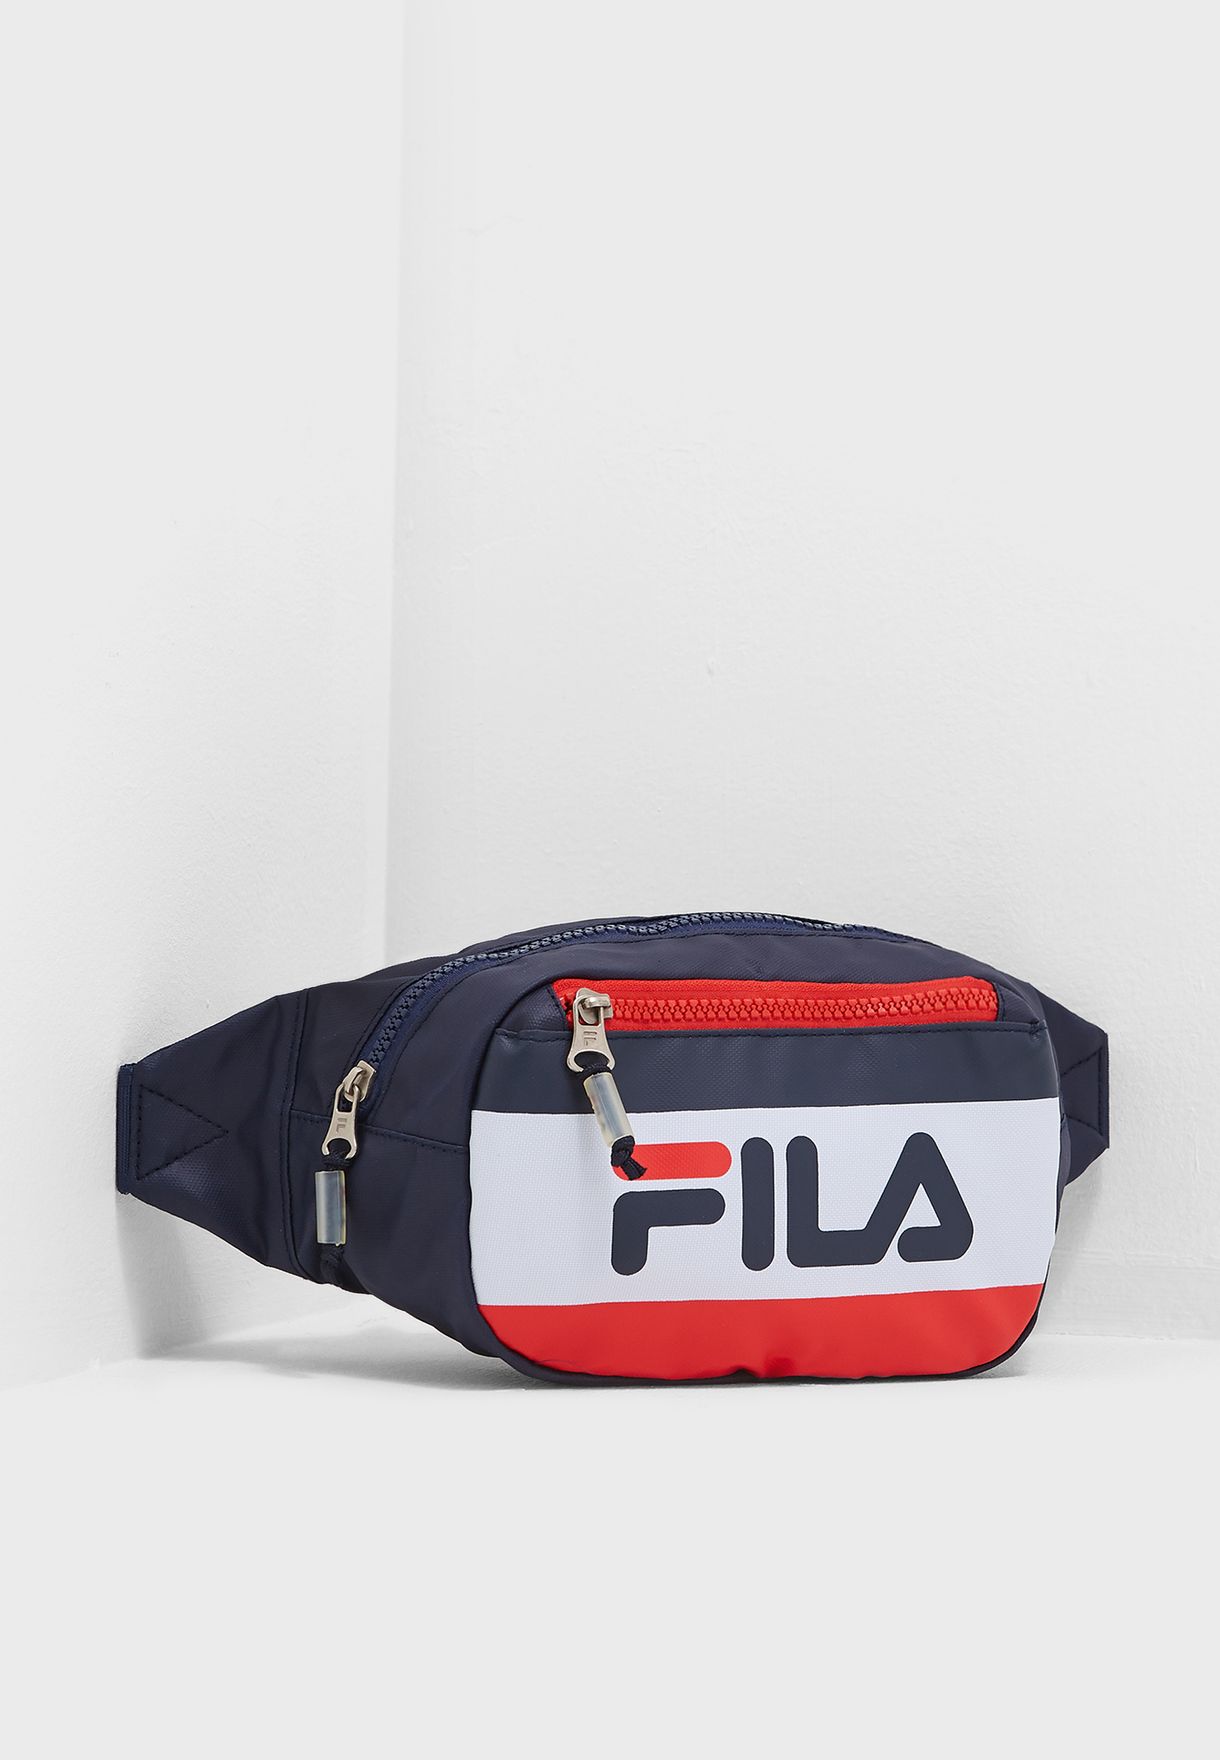 authentic fila belt bag